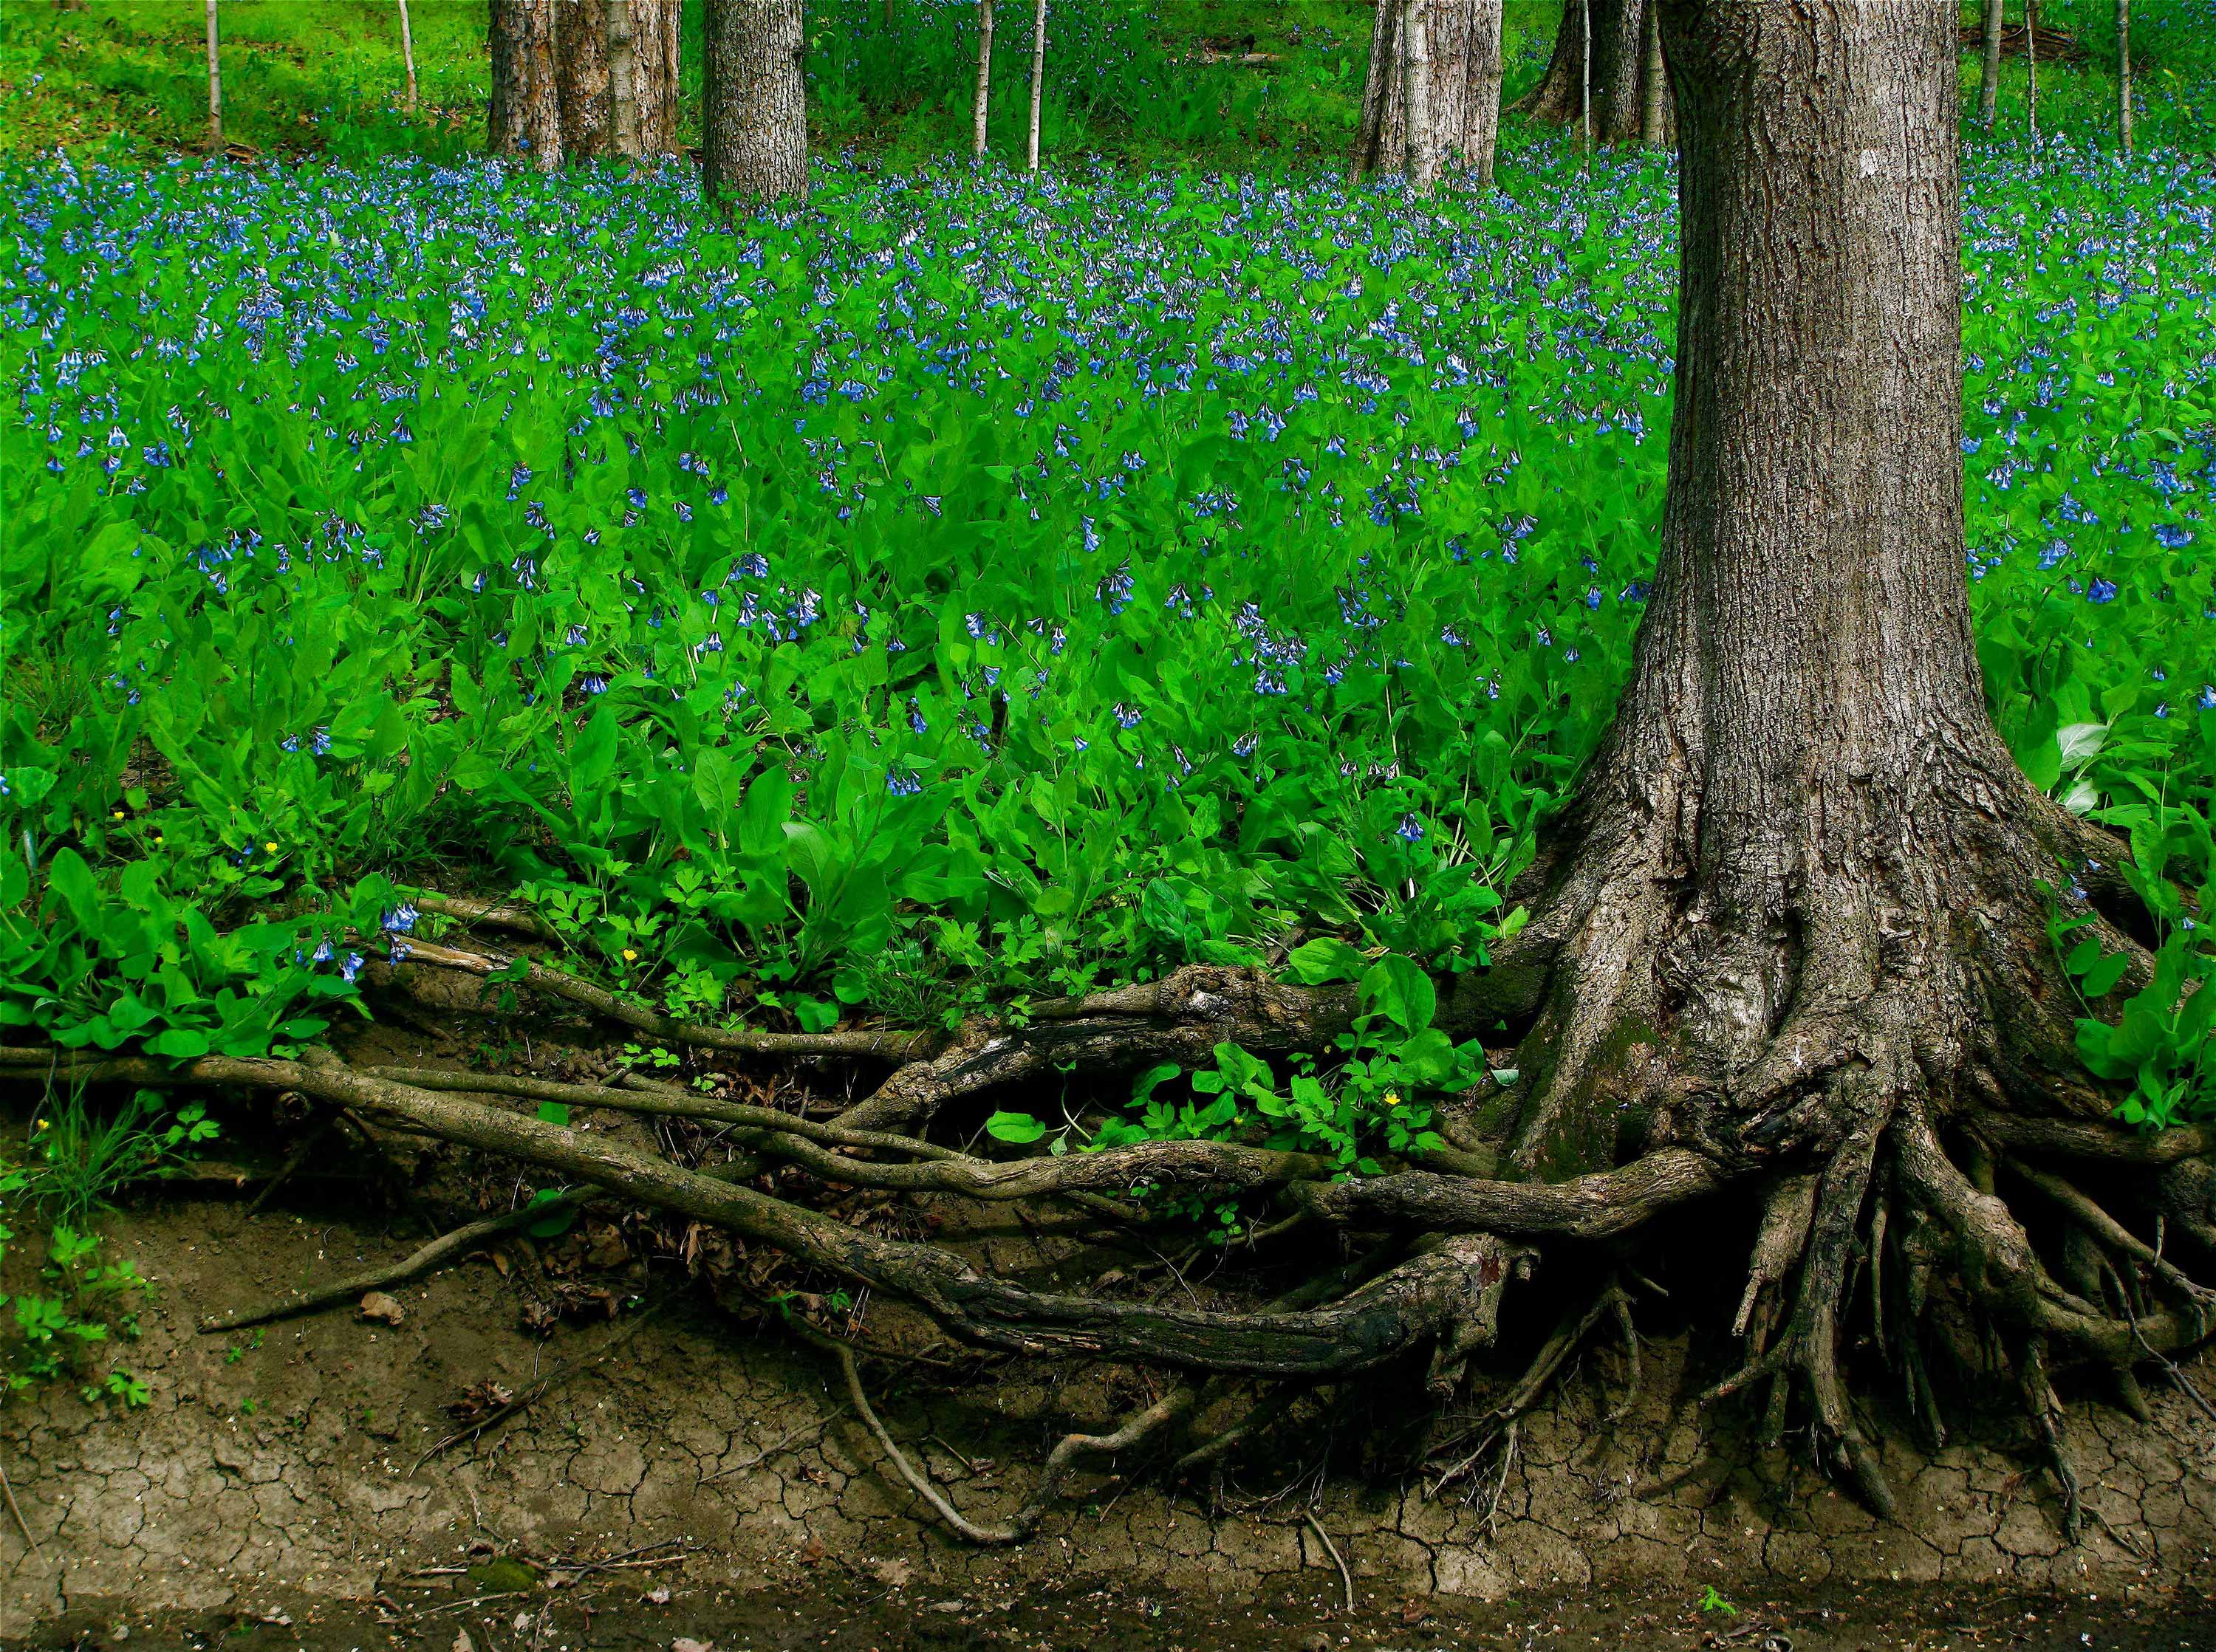 Virginia bluebells at Messenger Woods.